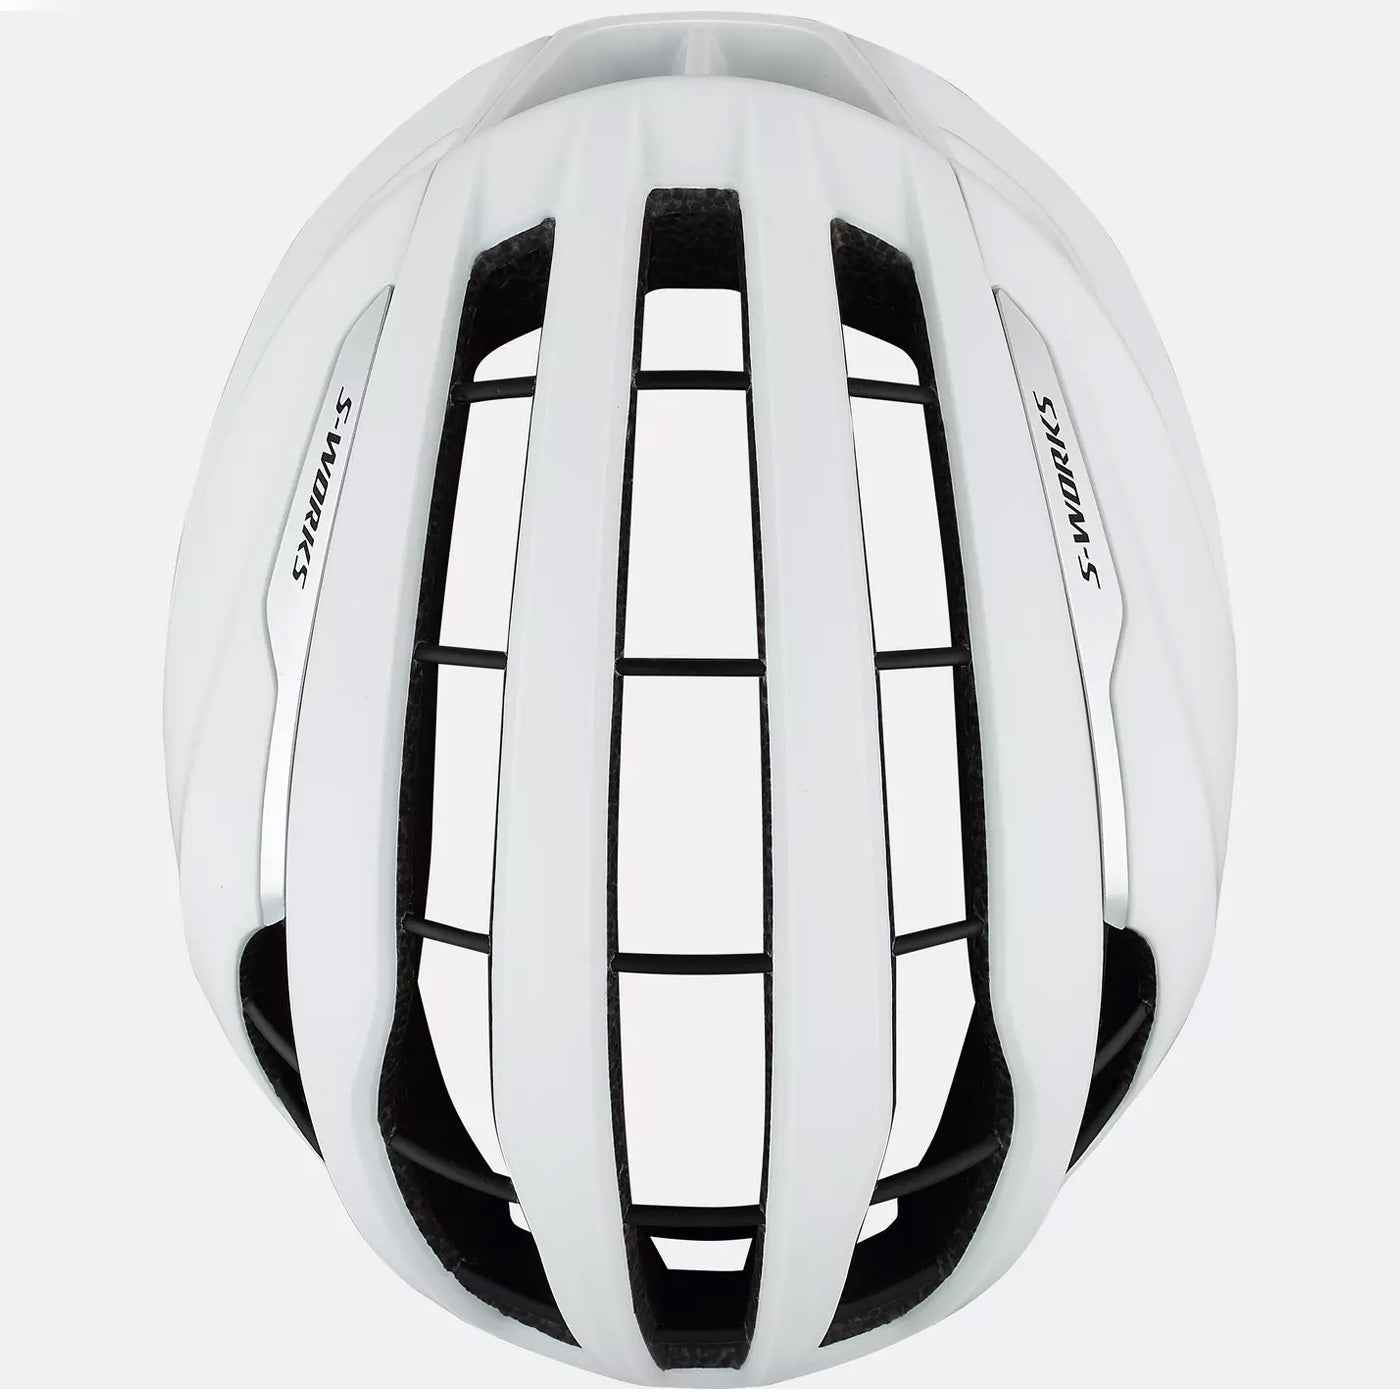 Specialized Prevail 3 helmet - White